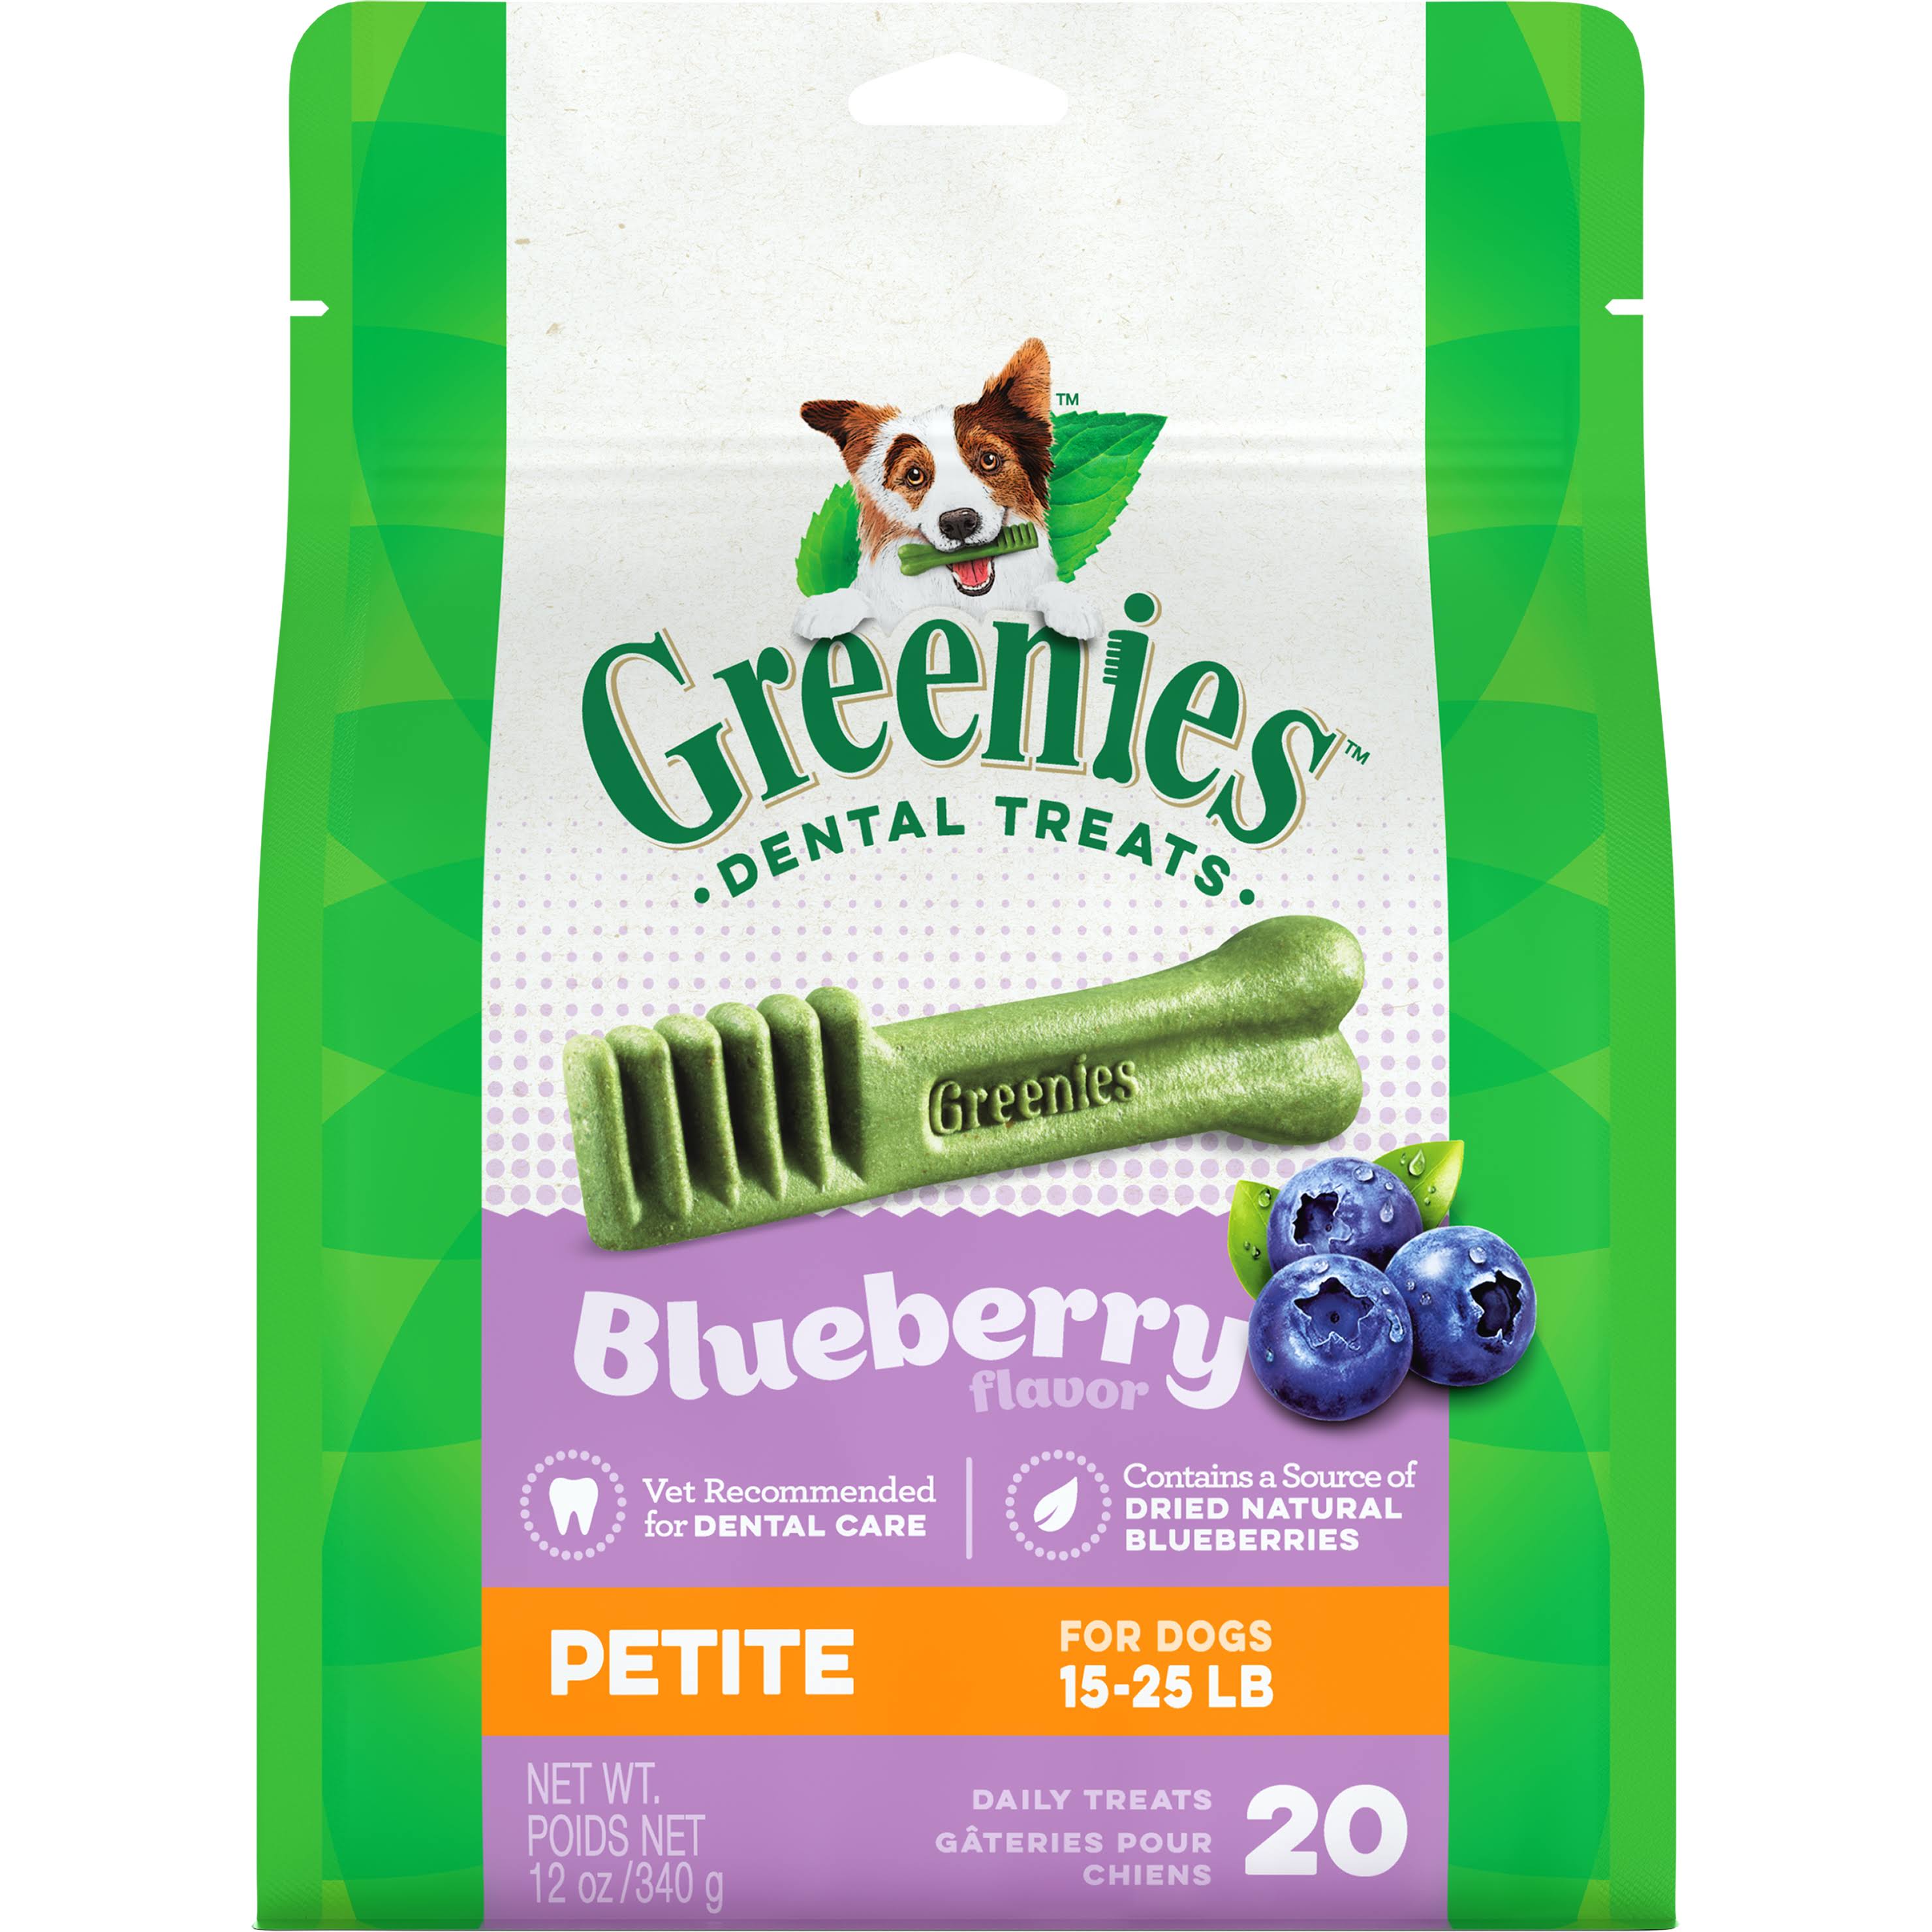 Greenies Dental Treats, Blueberry Flavor, Petite - 20 treats, 12 oz